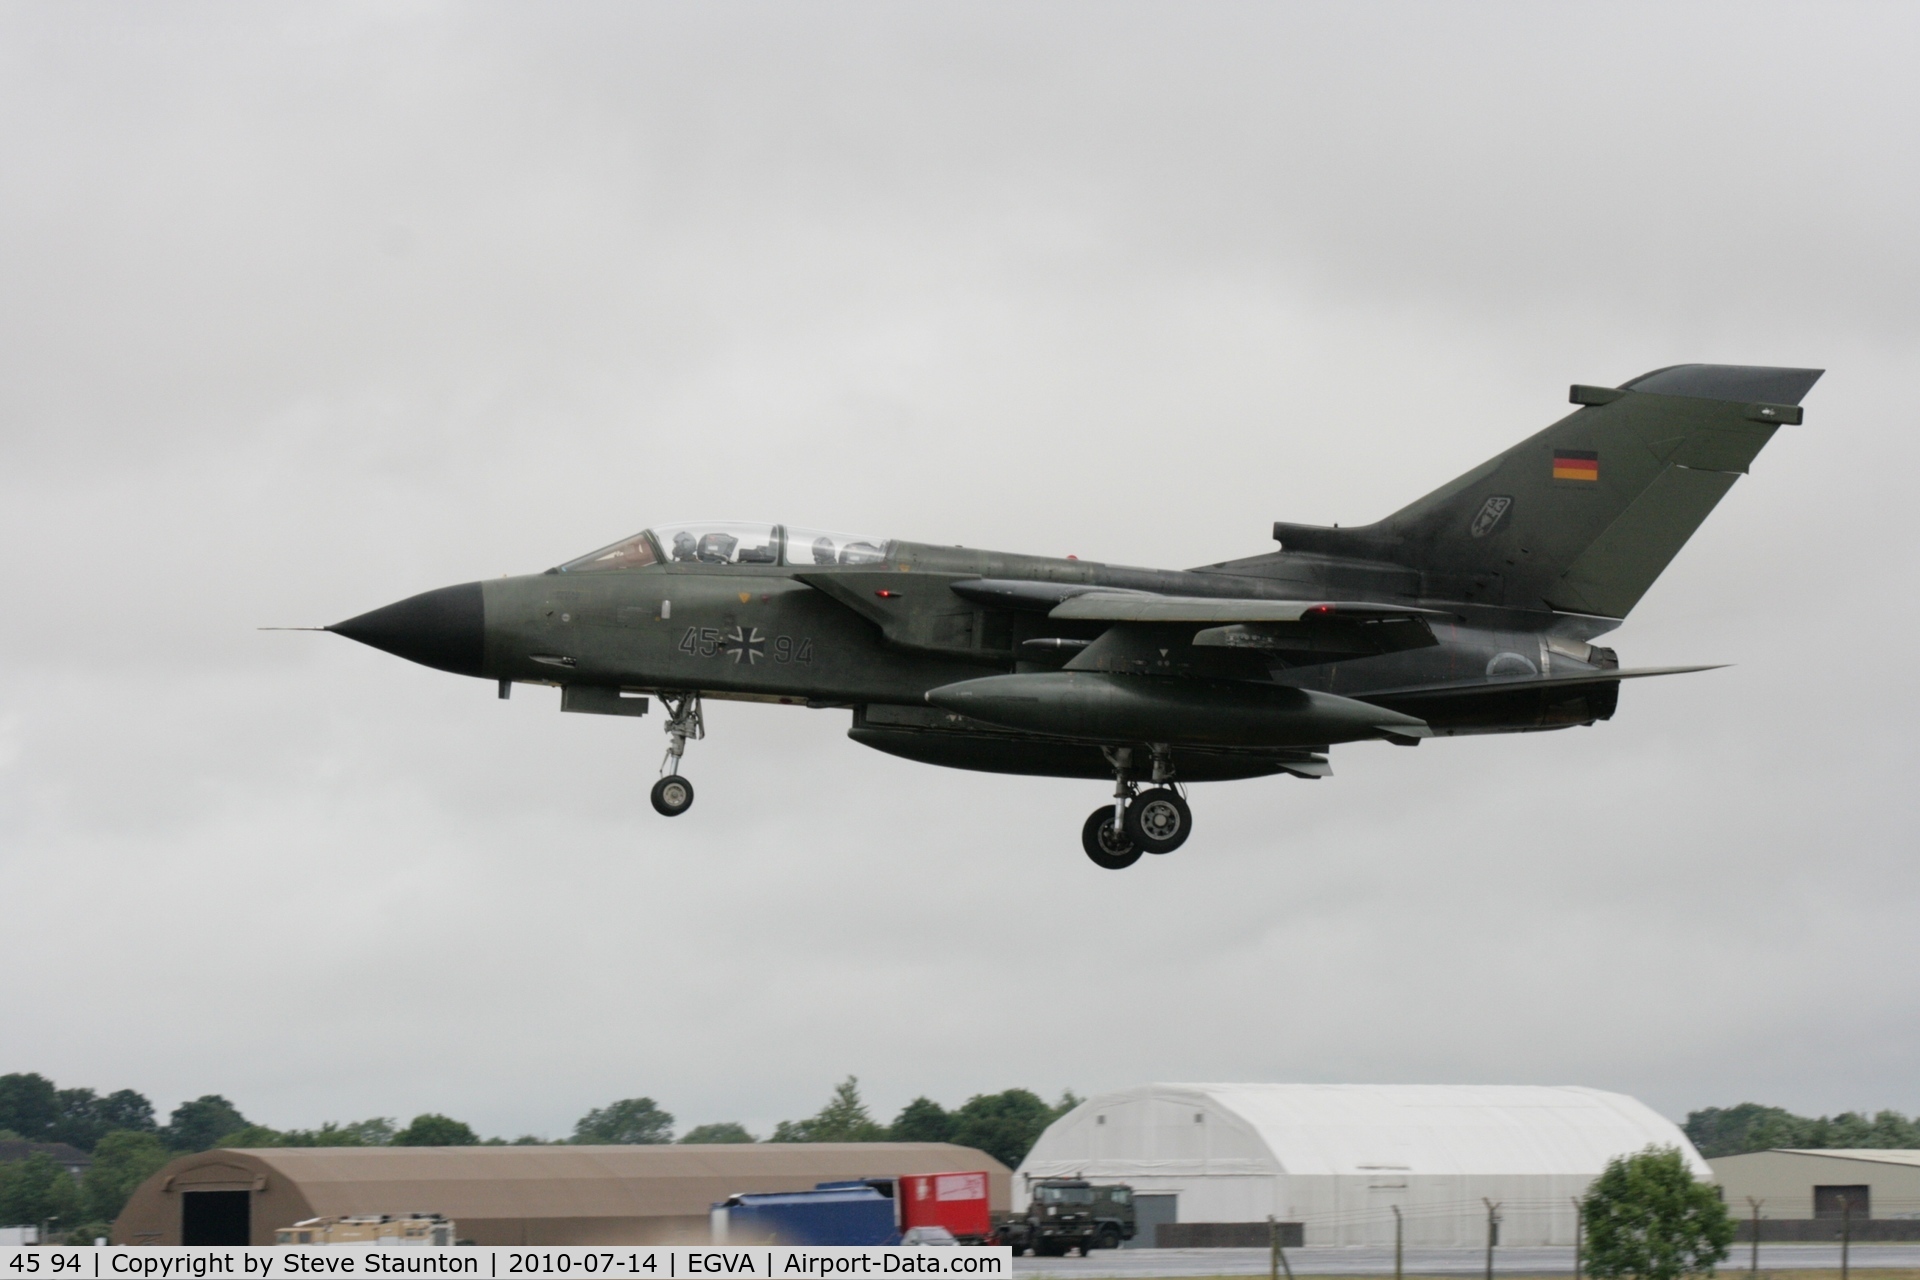 45 94, Panavia Tornado IDS C/N 729/GS235/4294, Taken at the Royal International Air Tattoo 2010